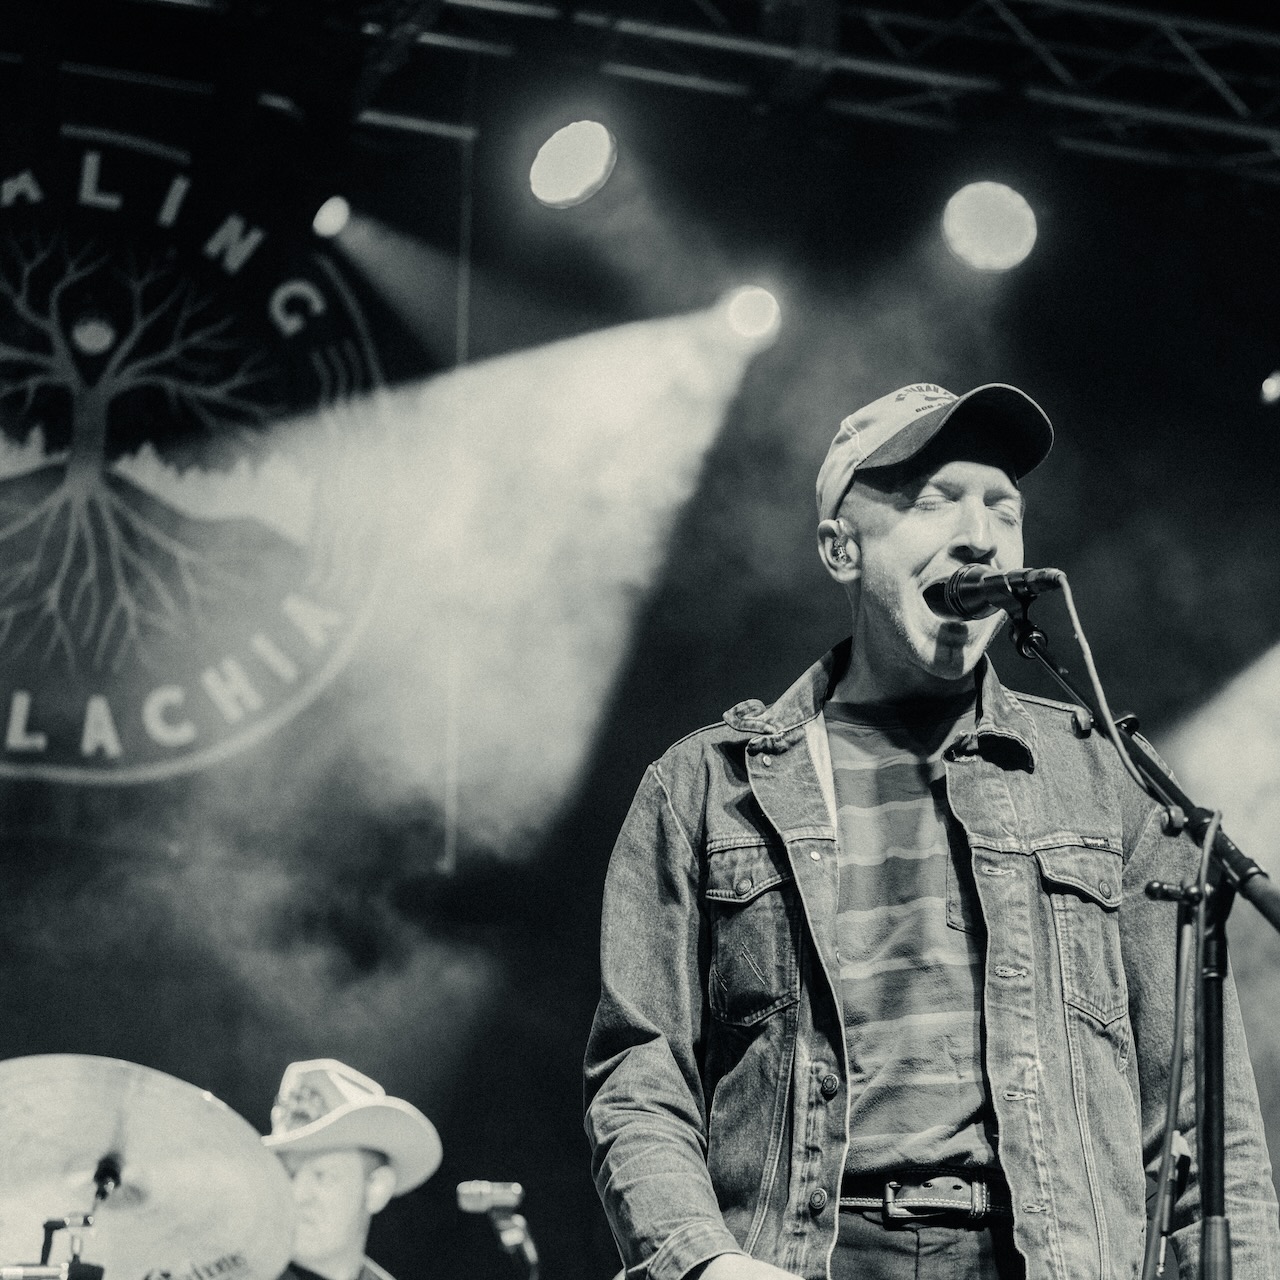 Dan Tyminski Tips His Hat to Tony Rice on New Tribute EP